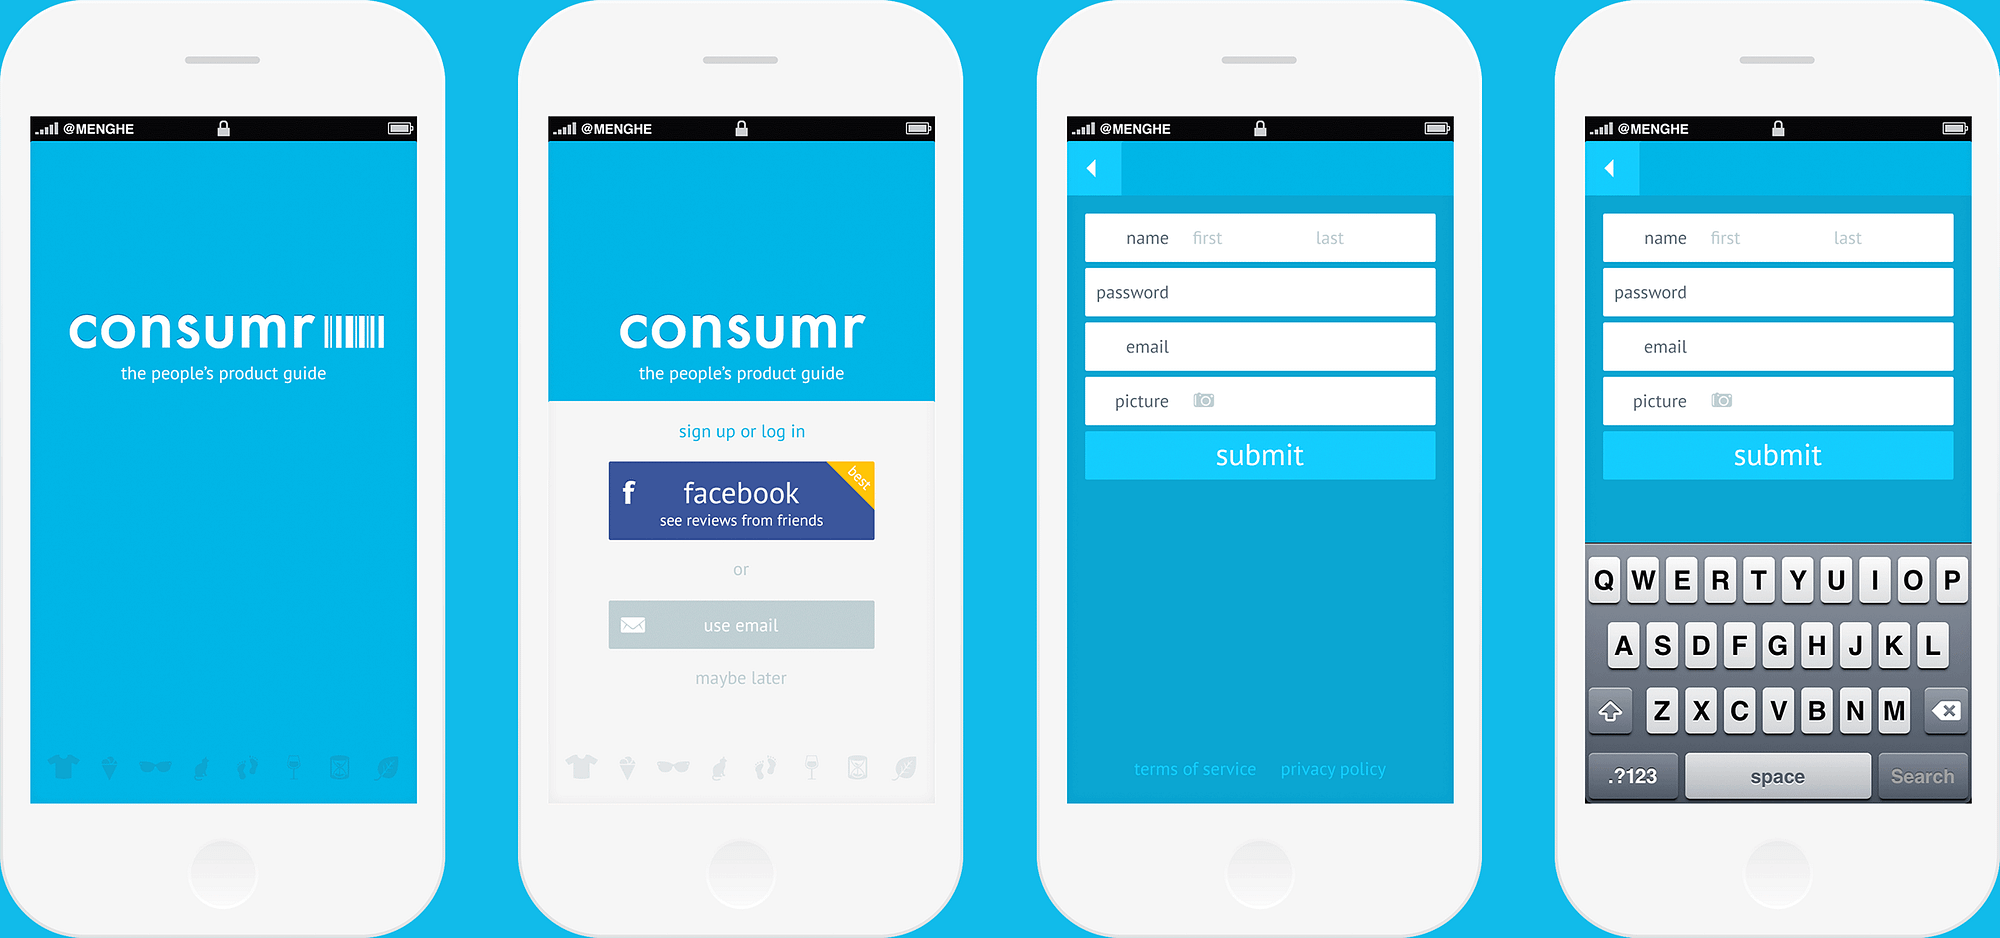 meng-he-consumr-final-app-design-signin